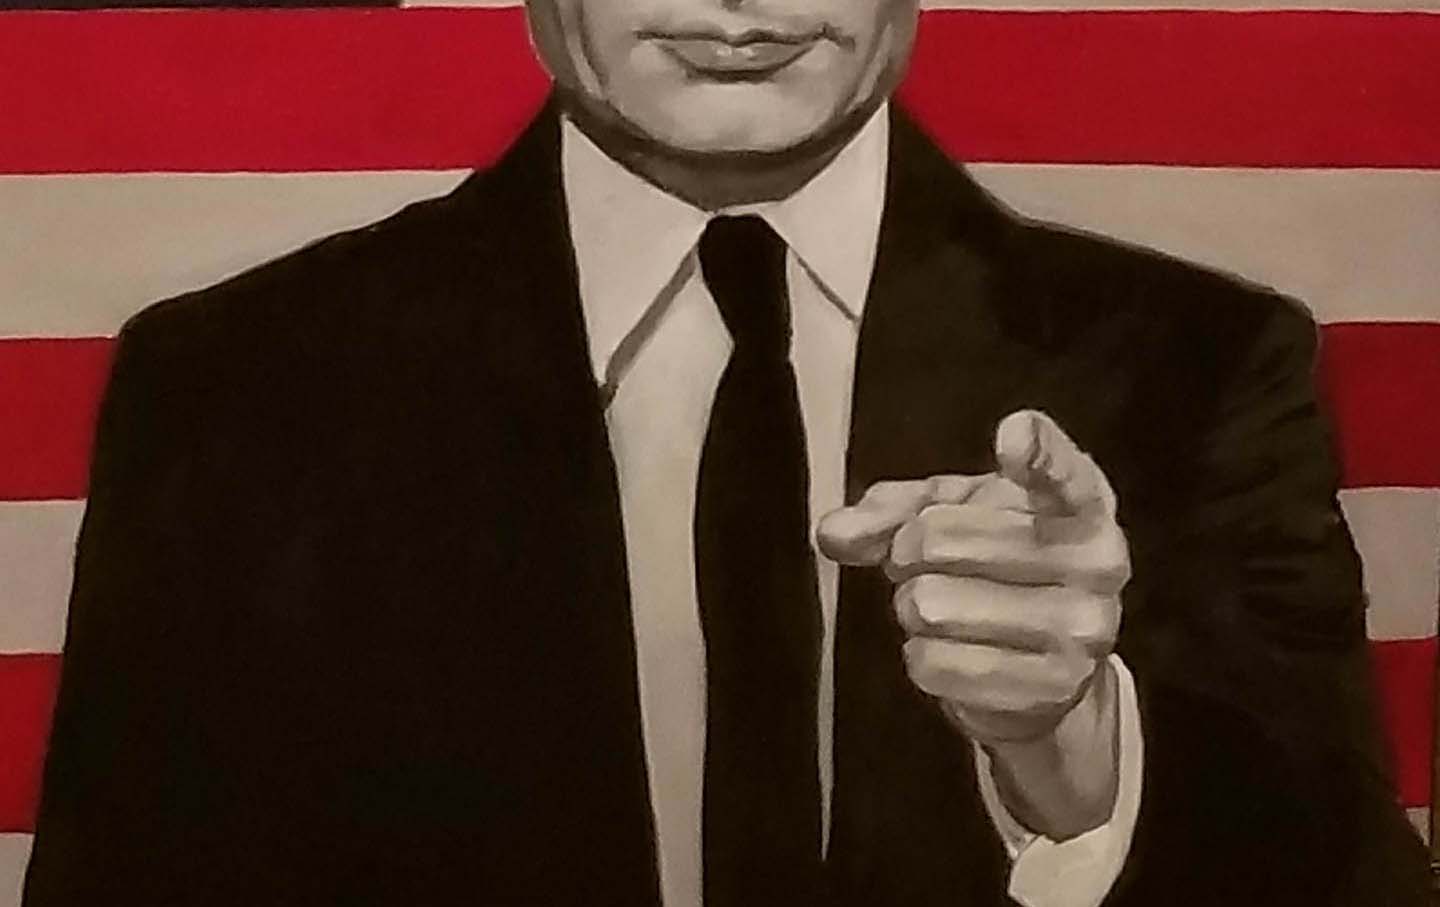 Putin Wants You!